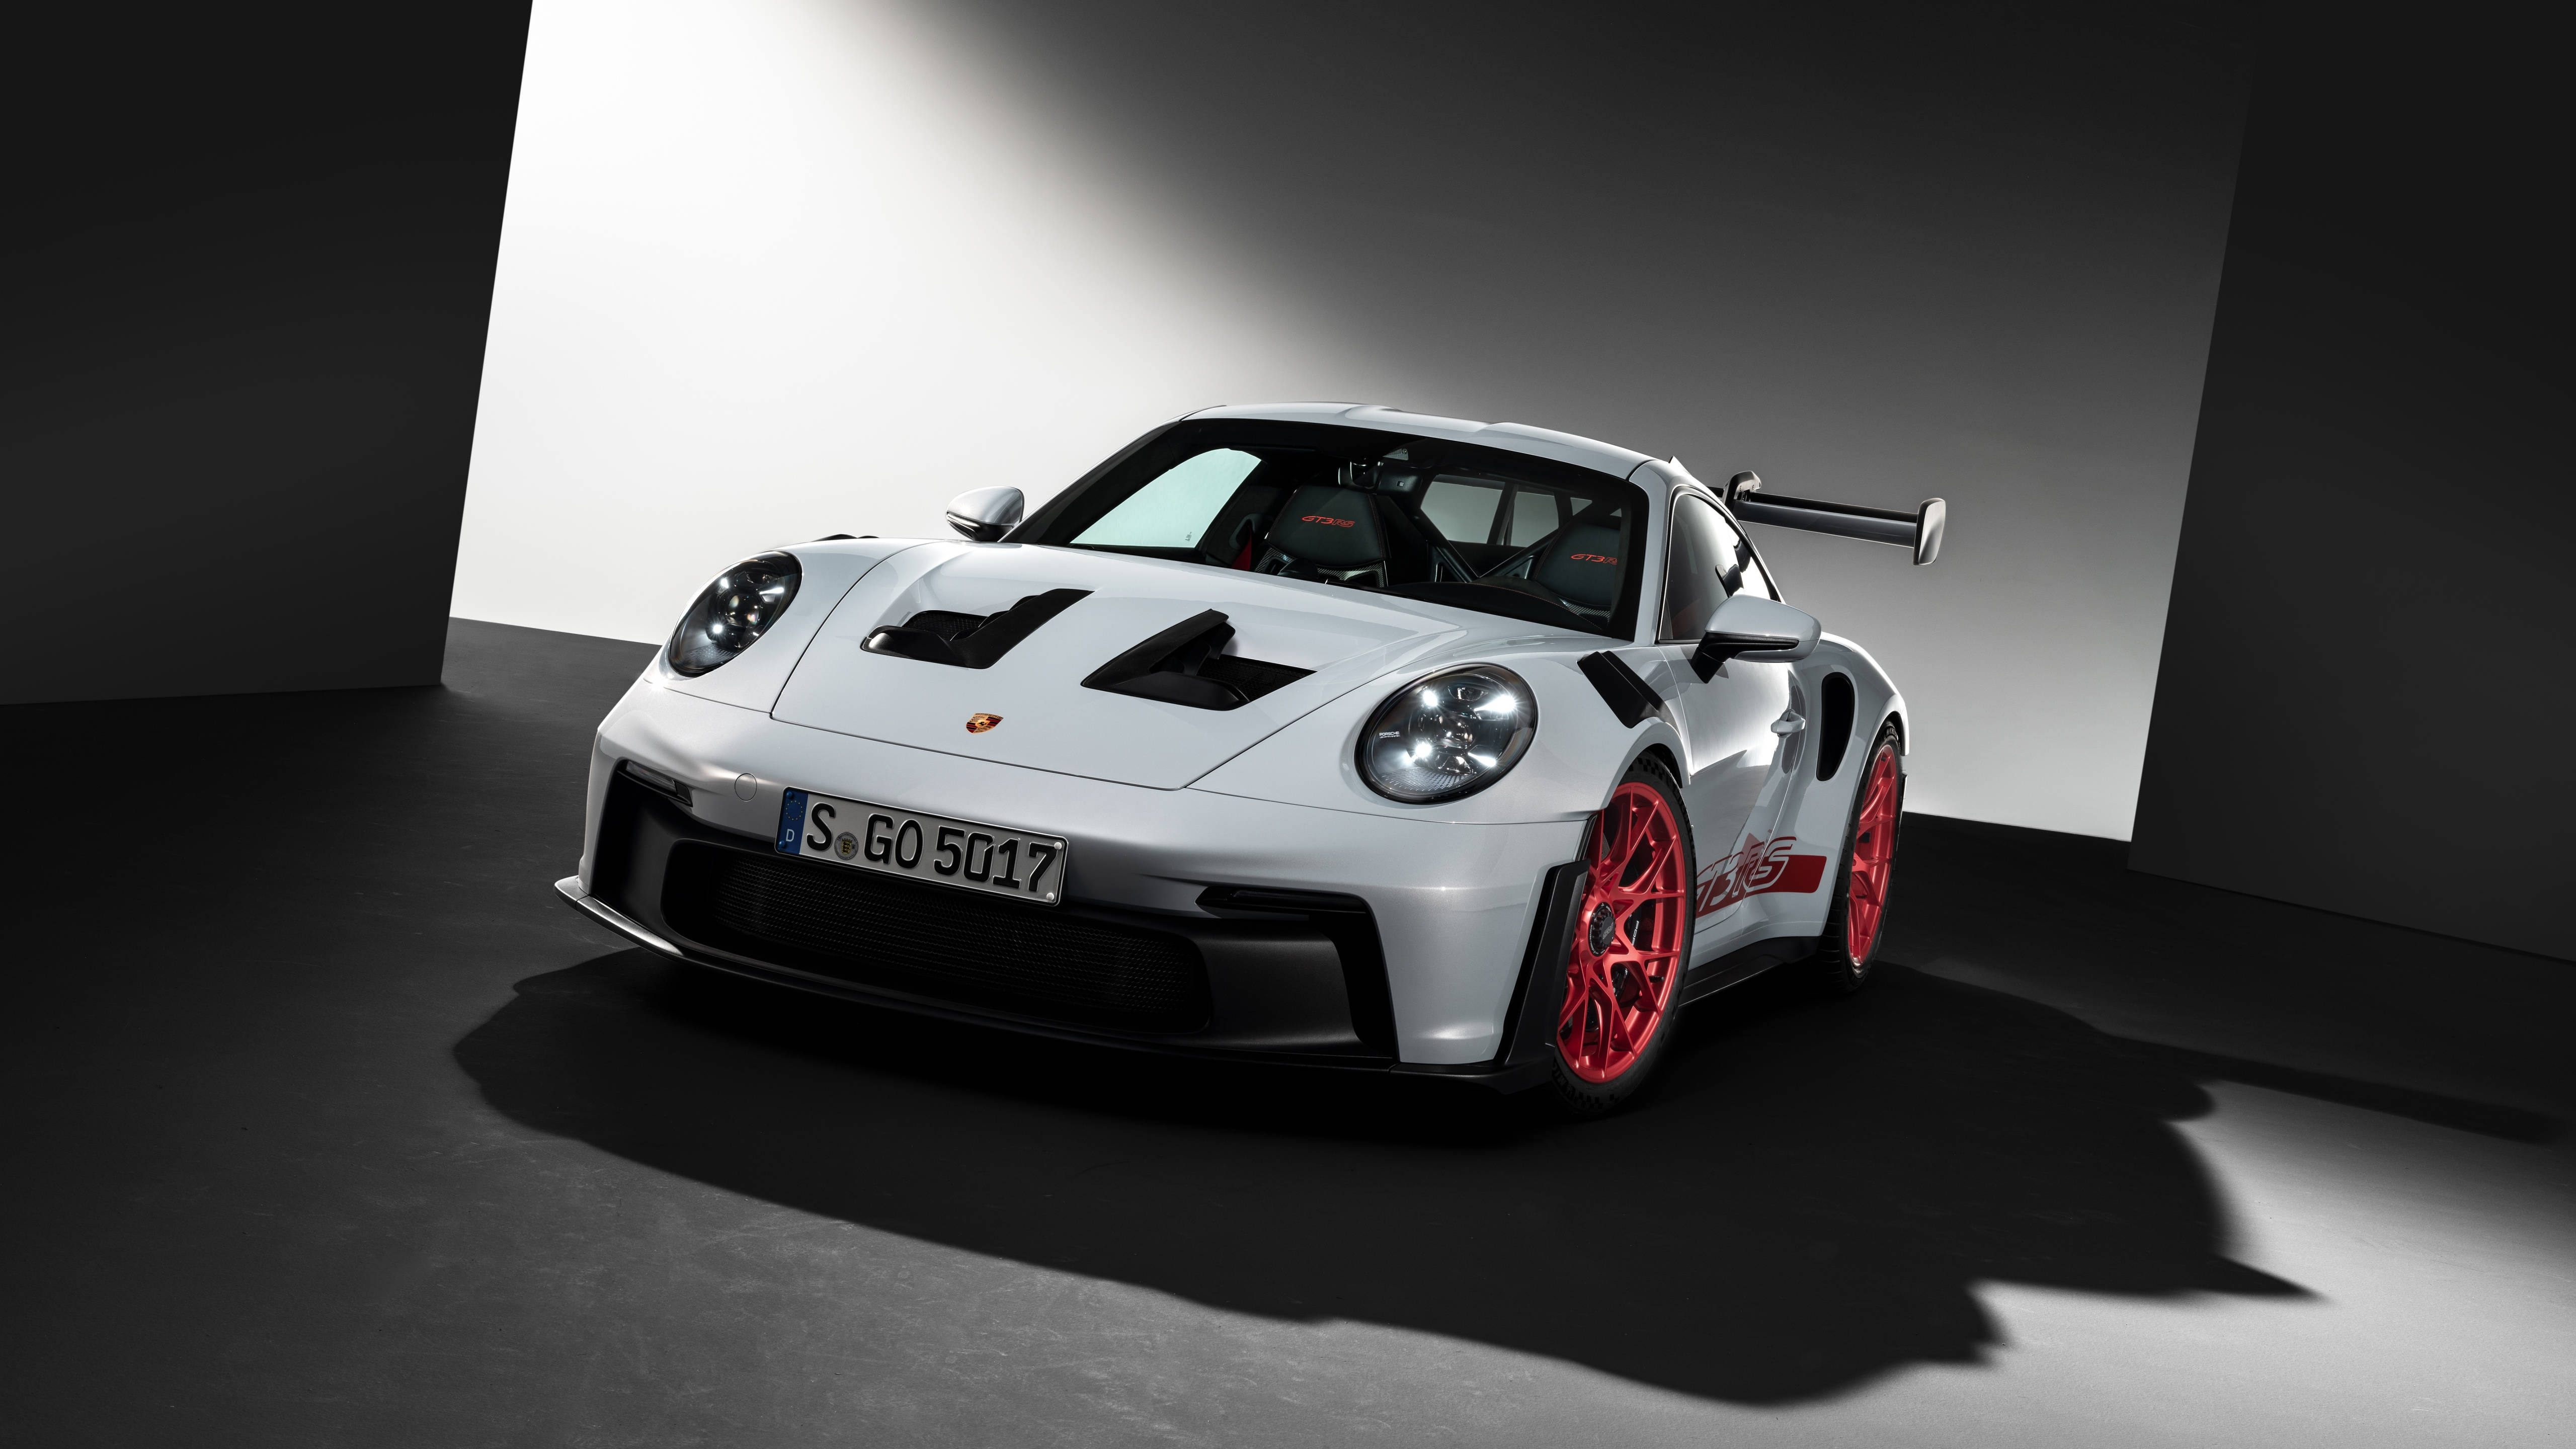 Download White Porsche Car 5120x1440 Wallpaper | Wallpapers.com